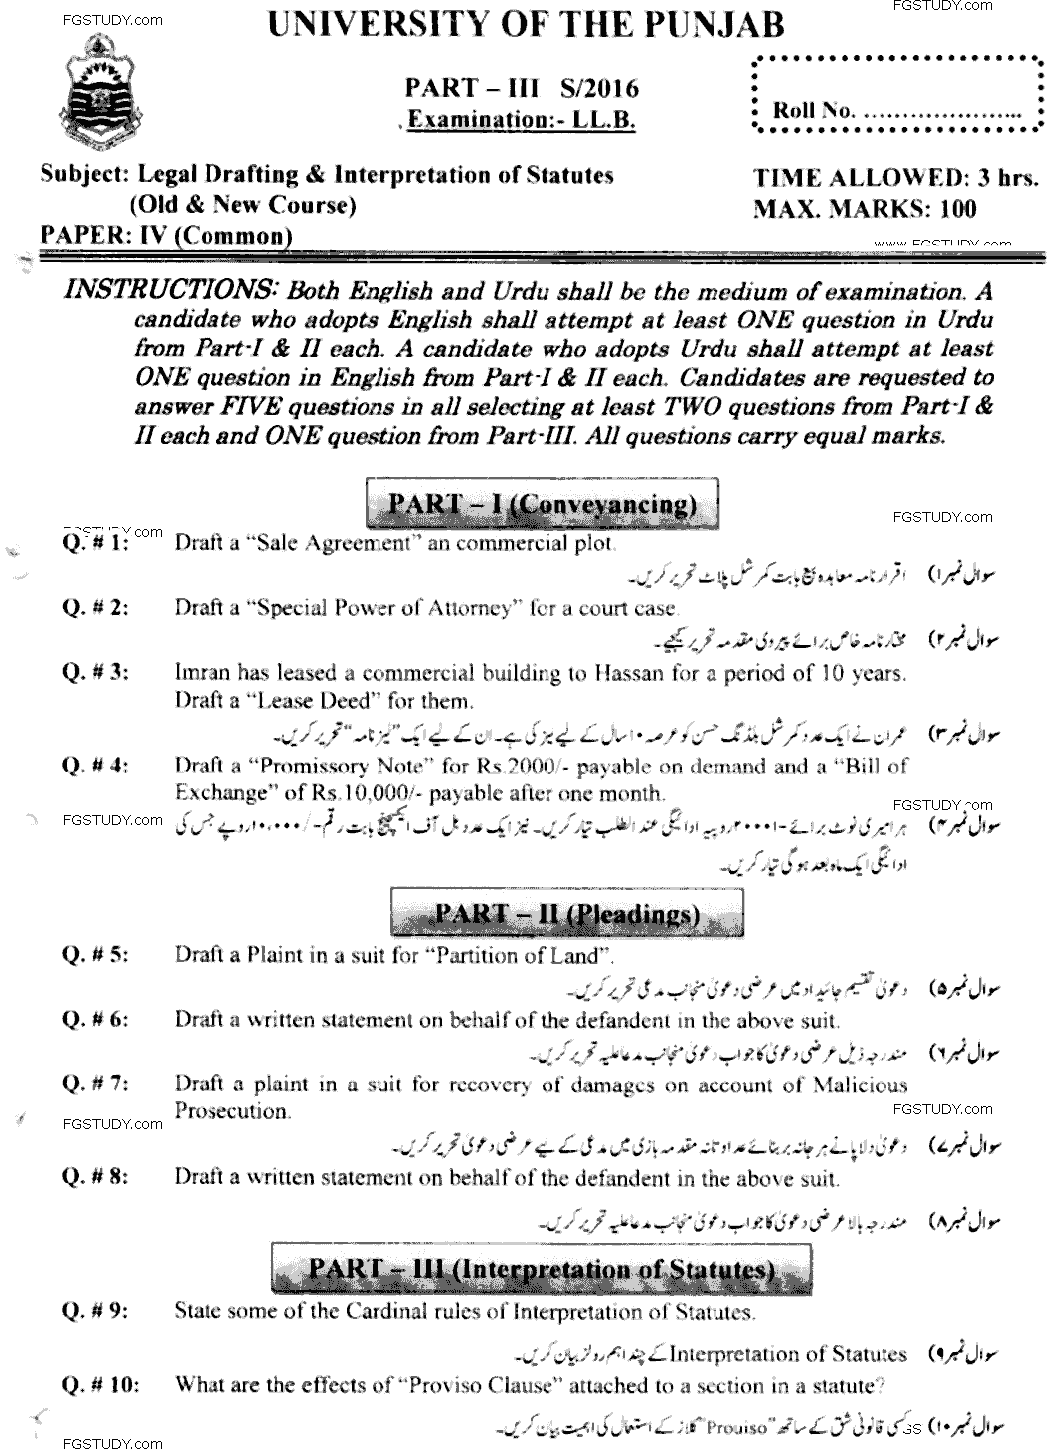 Llb Part 3 Legal Drafting Interpretation Of Statutes Past Paper 2016 Punjab University